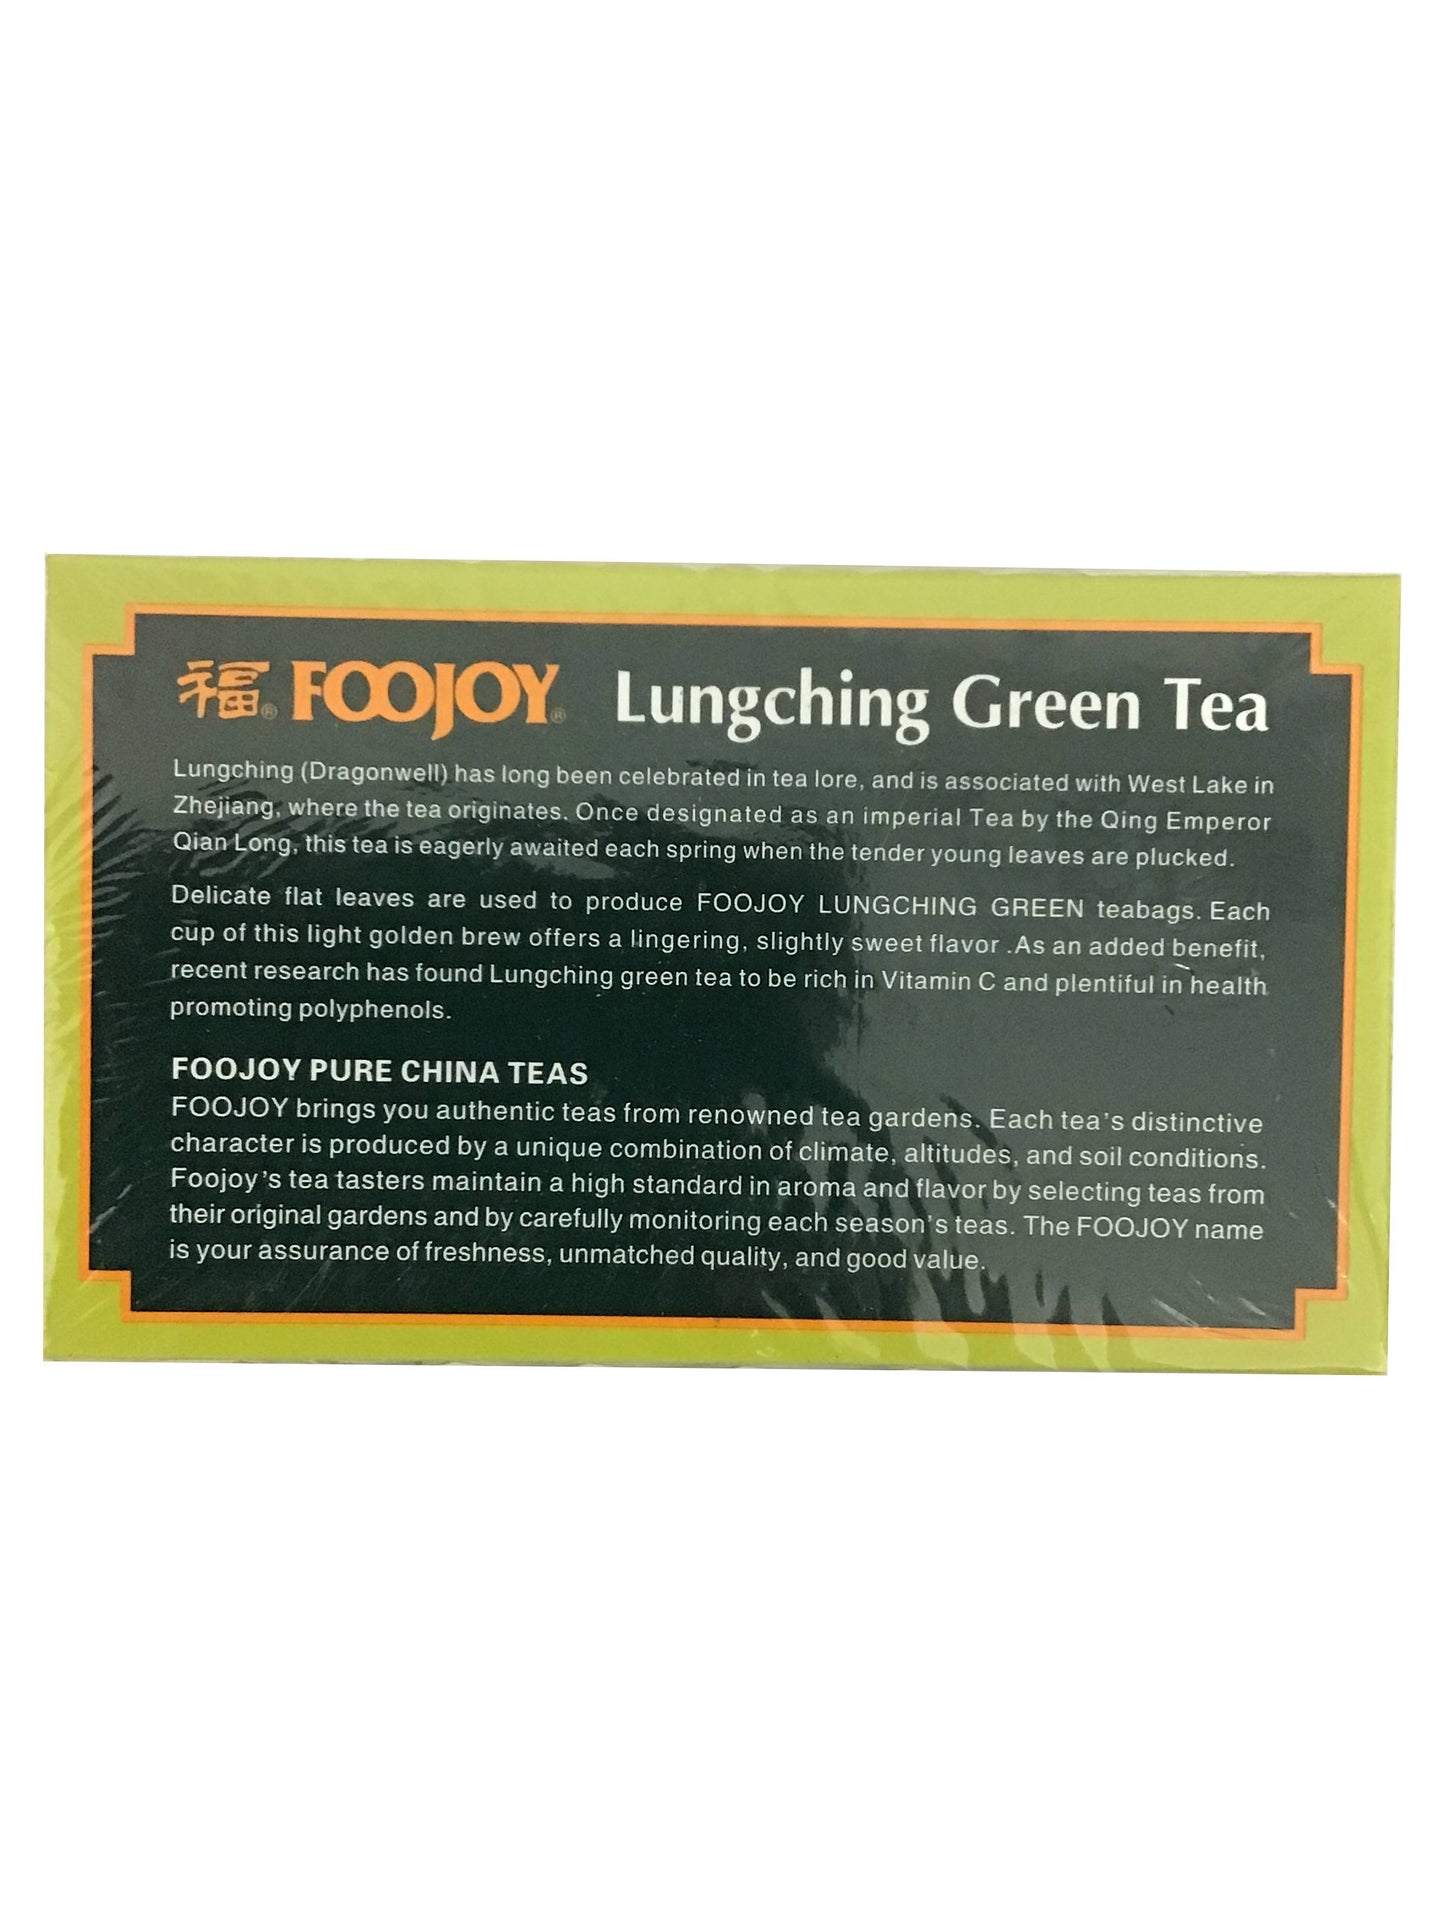 Foojoy Lungching Green Tea 福字西湖龙井绿茶